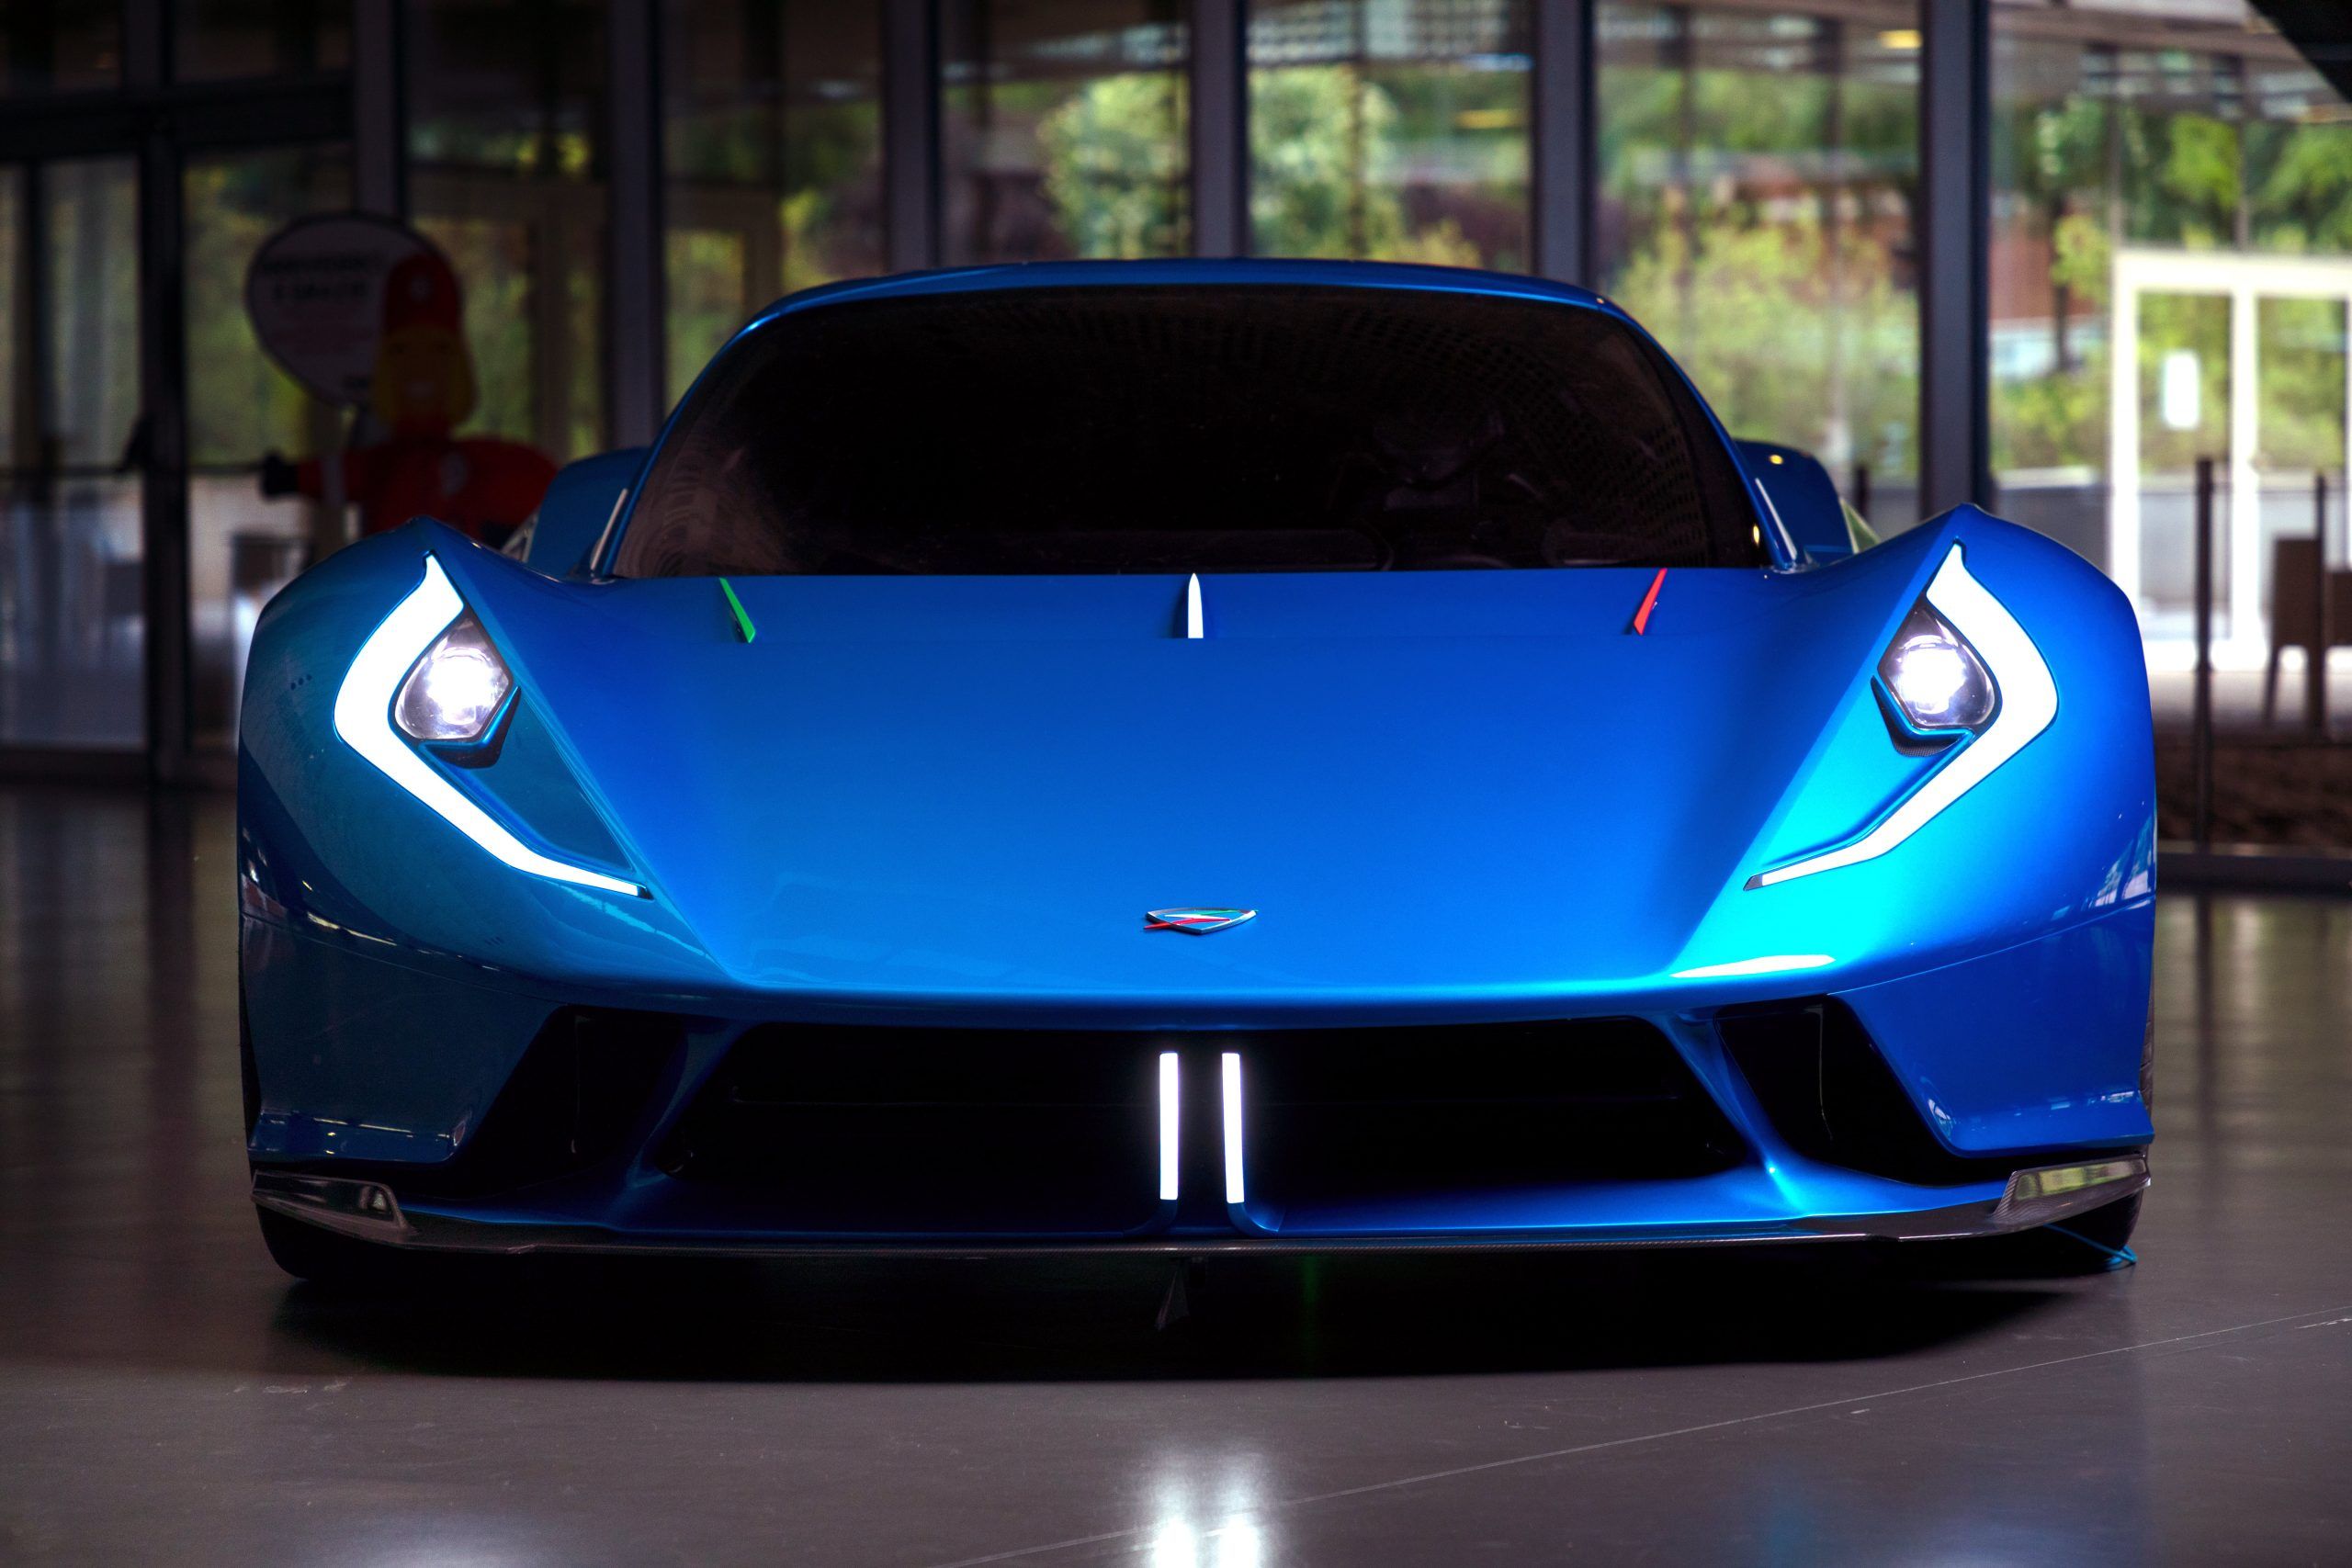 Blue Automobili Estrema Fulminea front fascia view